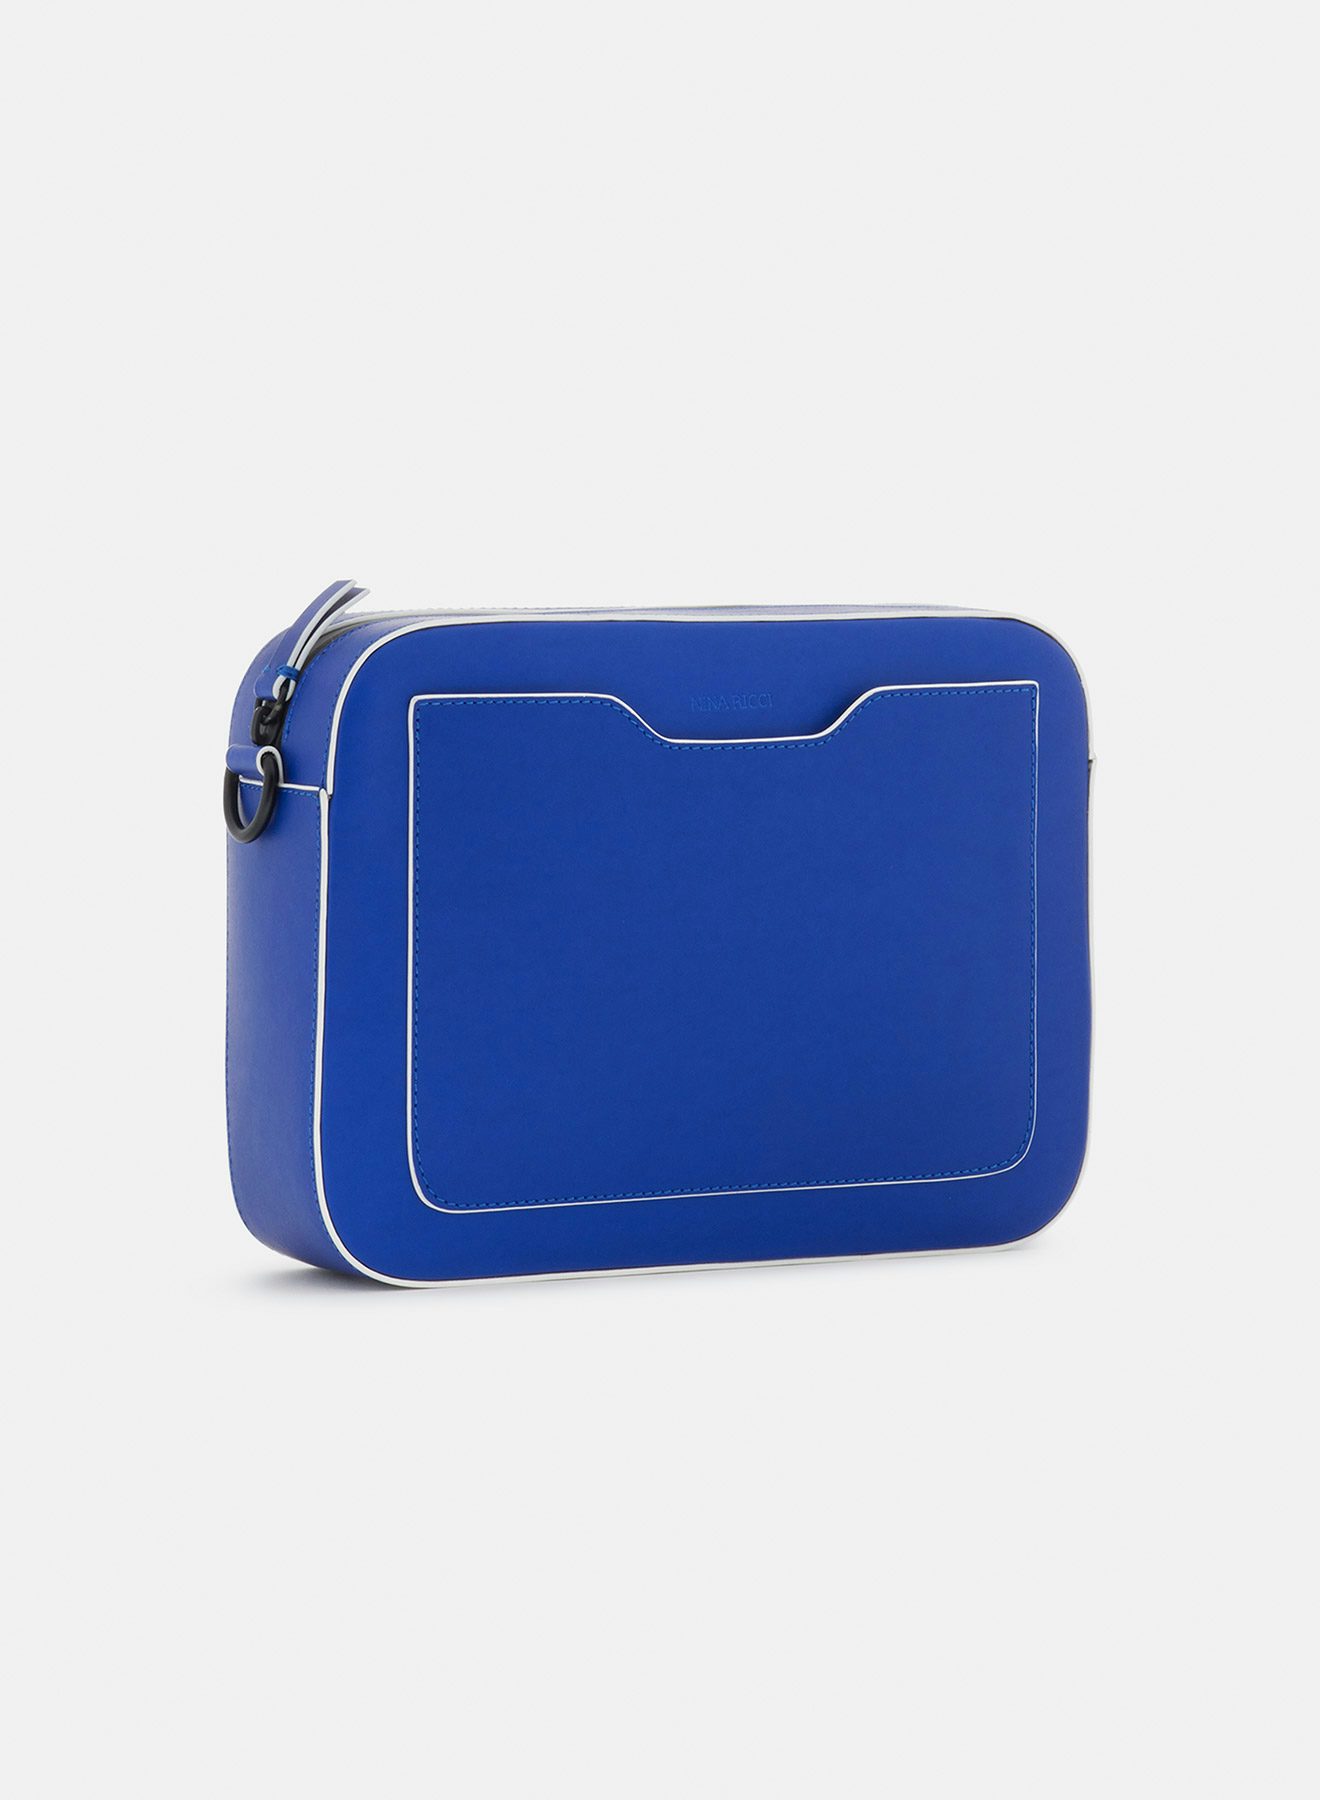 Big leather camera bag klein blue - Nina Ricci